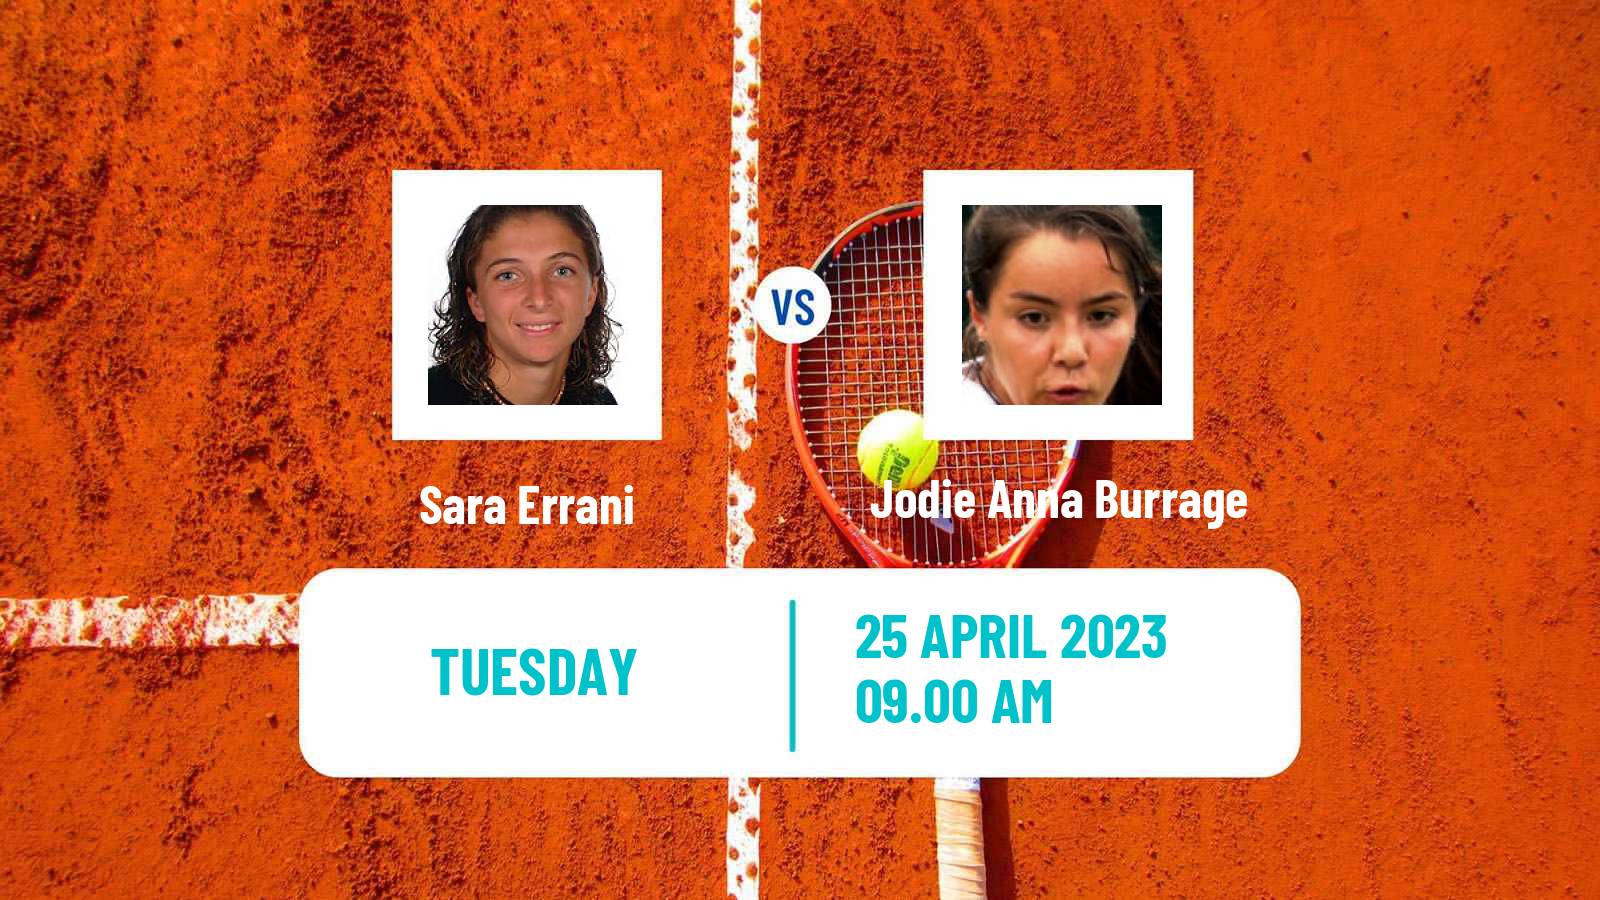 Tennis WTA Madrid Sara Errani - Jodie Anna Burrage